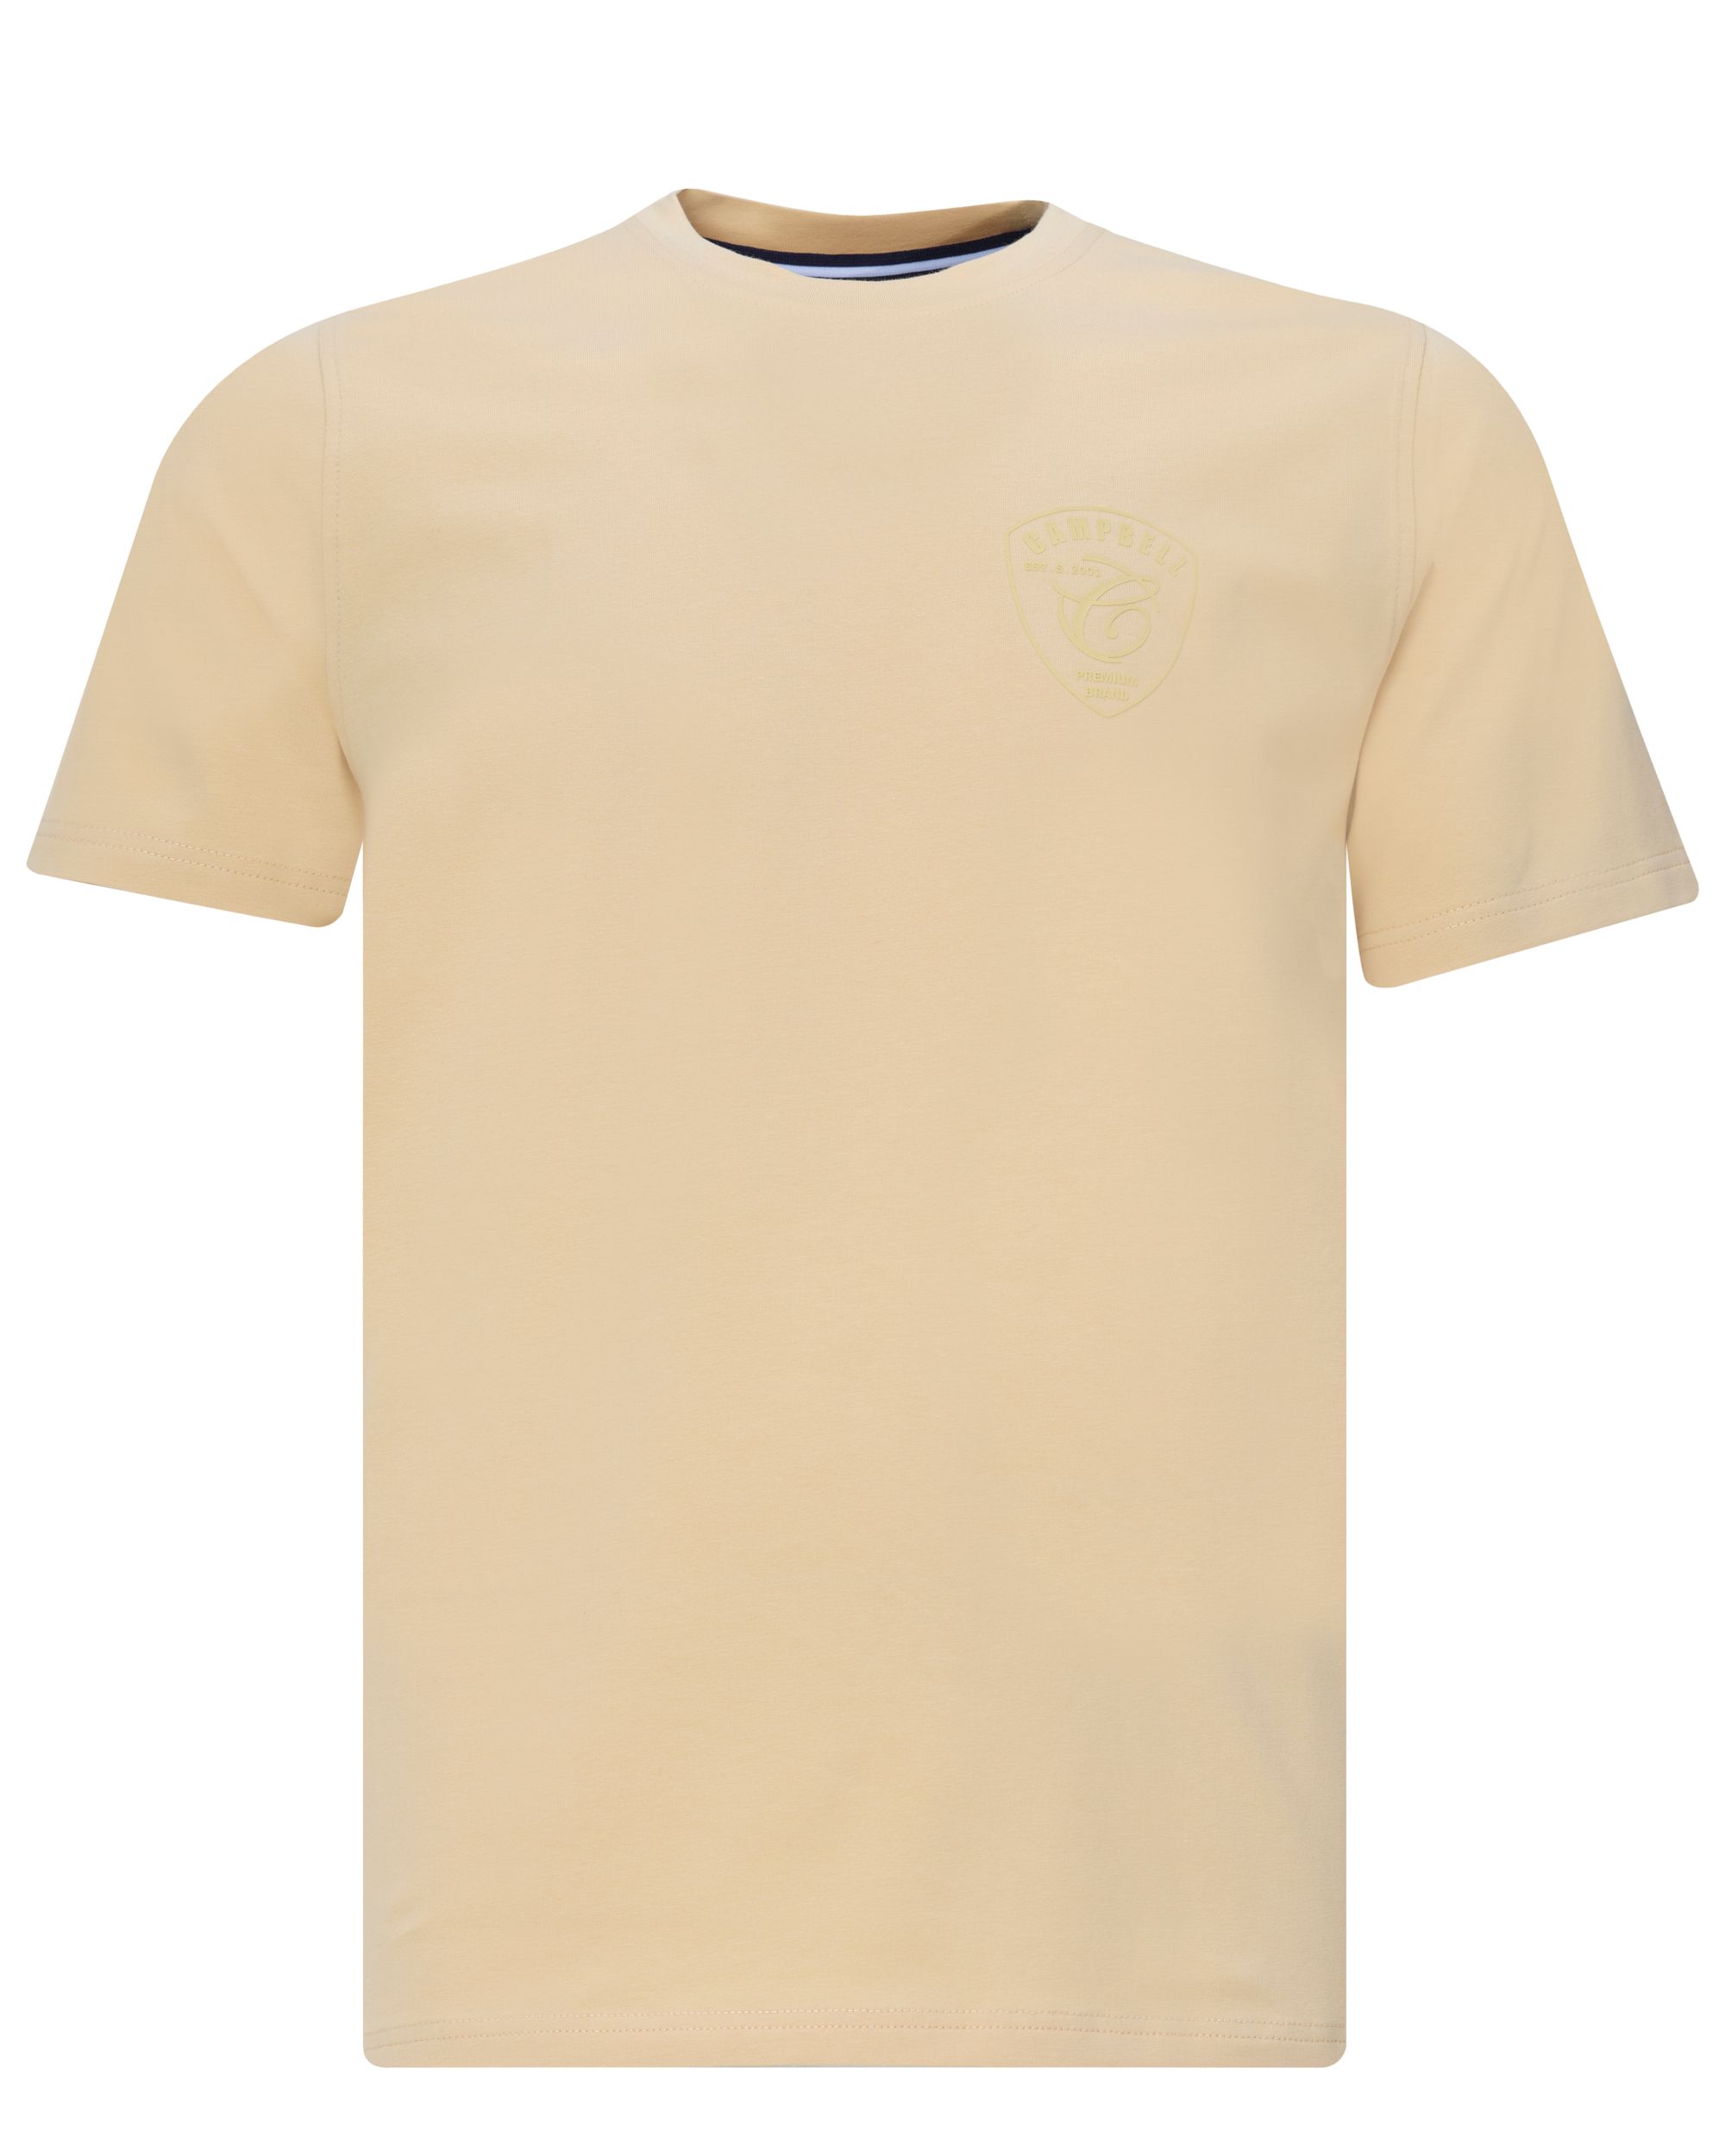 Campbell Classic Soho T-shirt KM New Wheat 081503-003-L